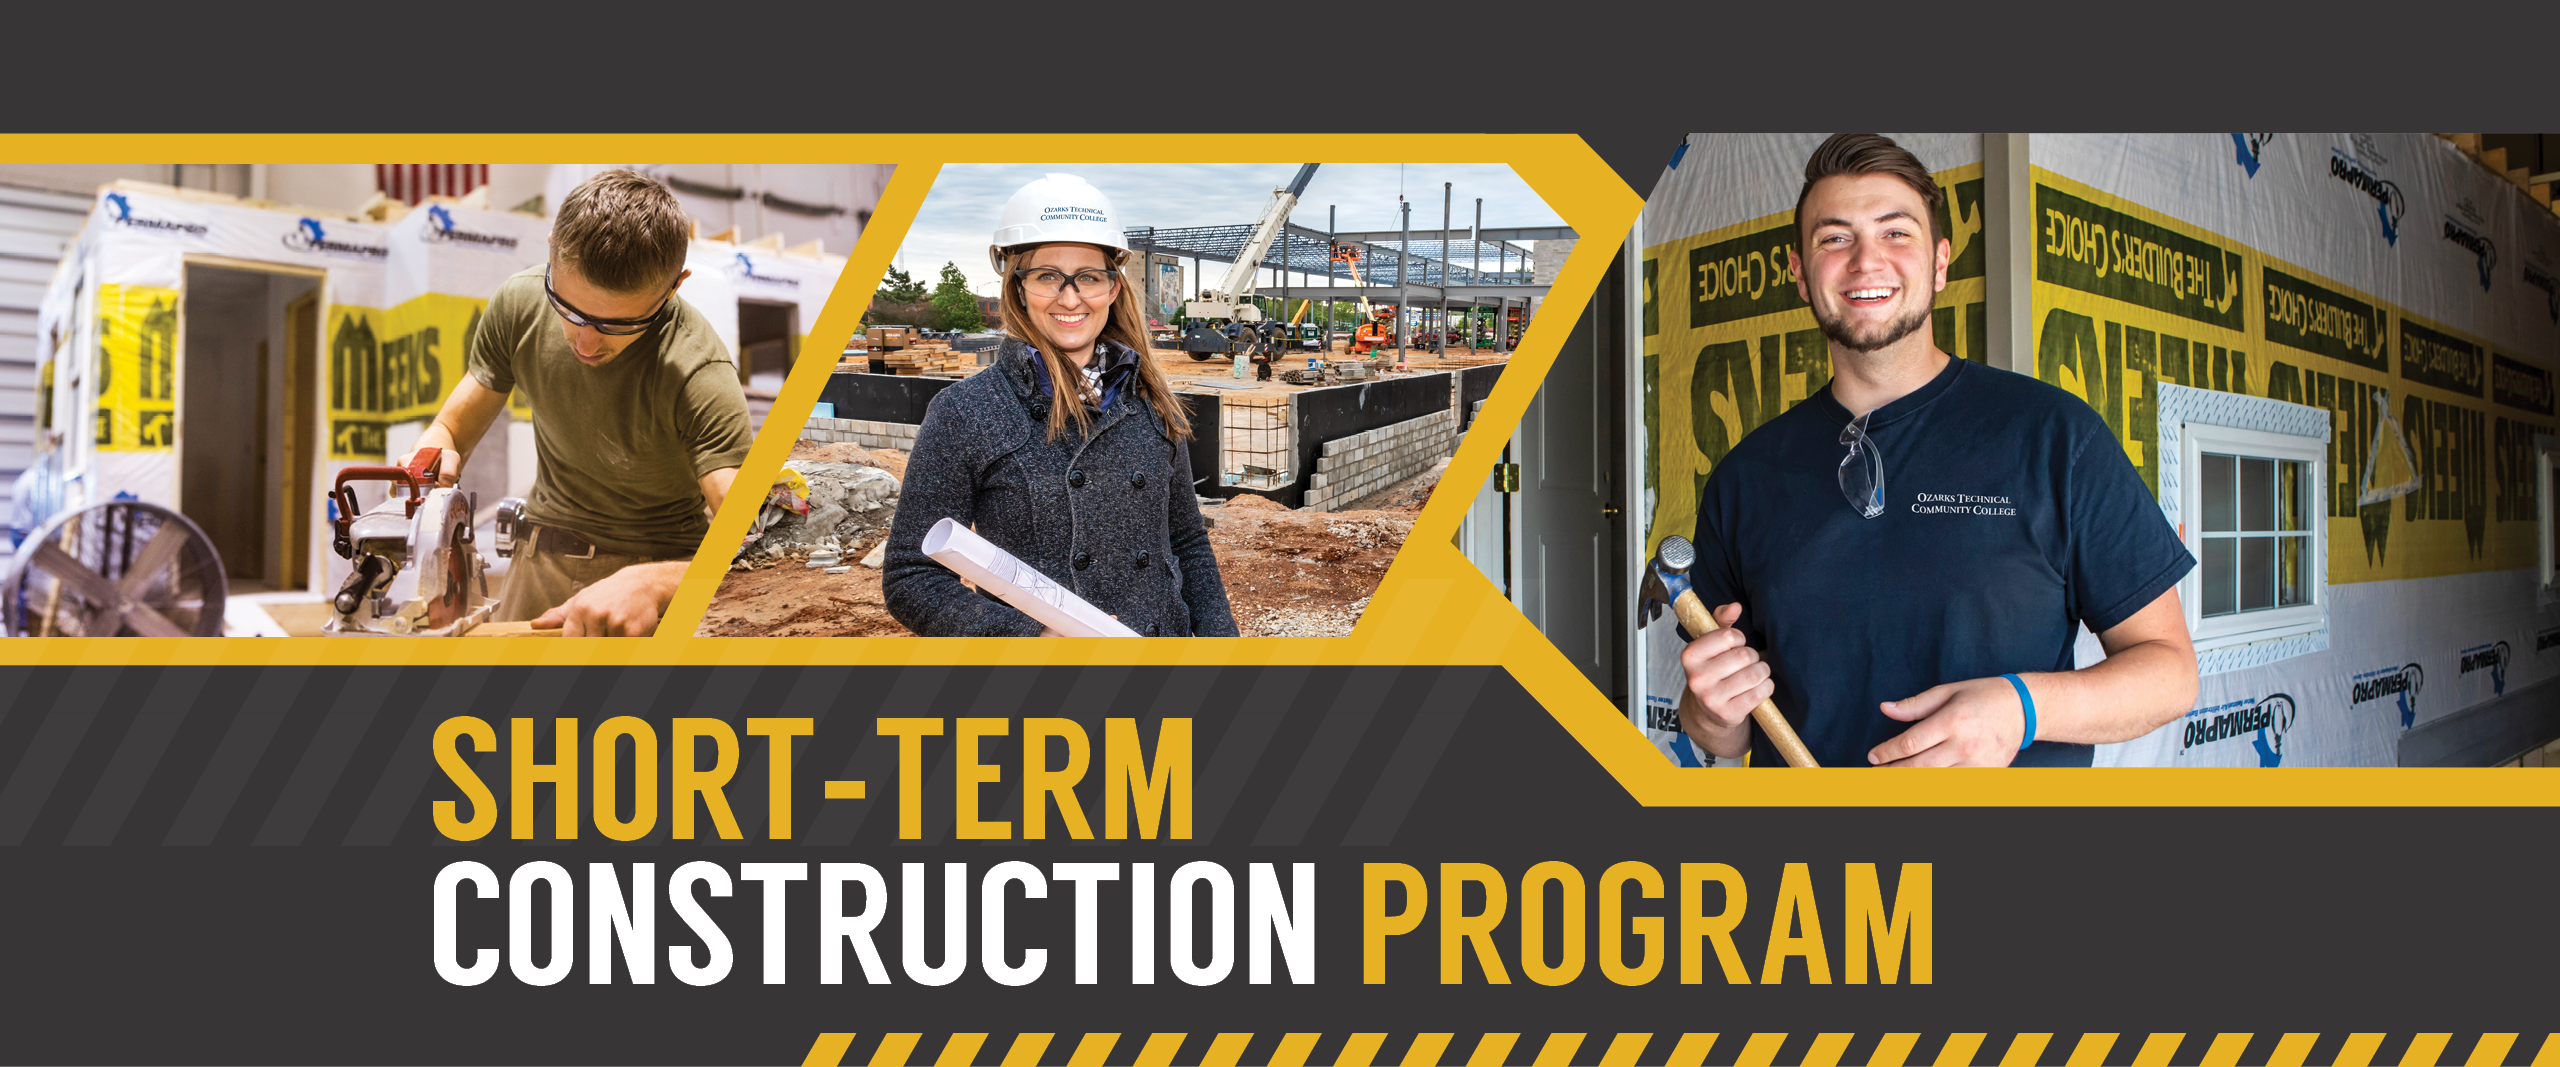 Construction Program - Short-Term Training